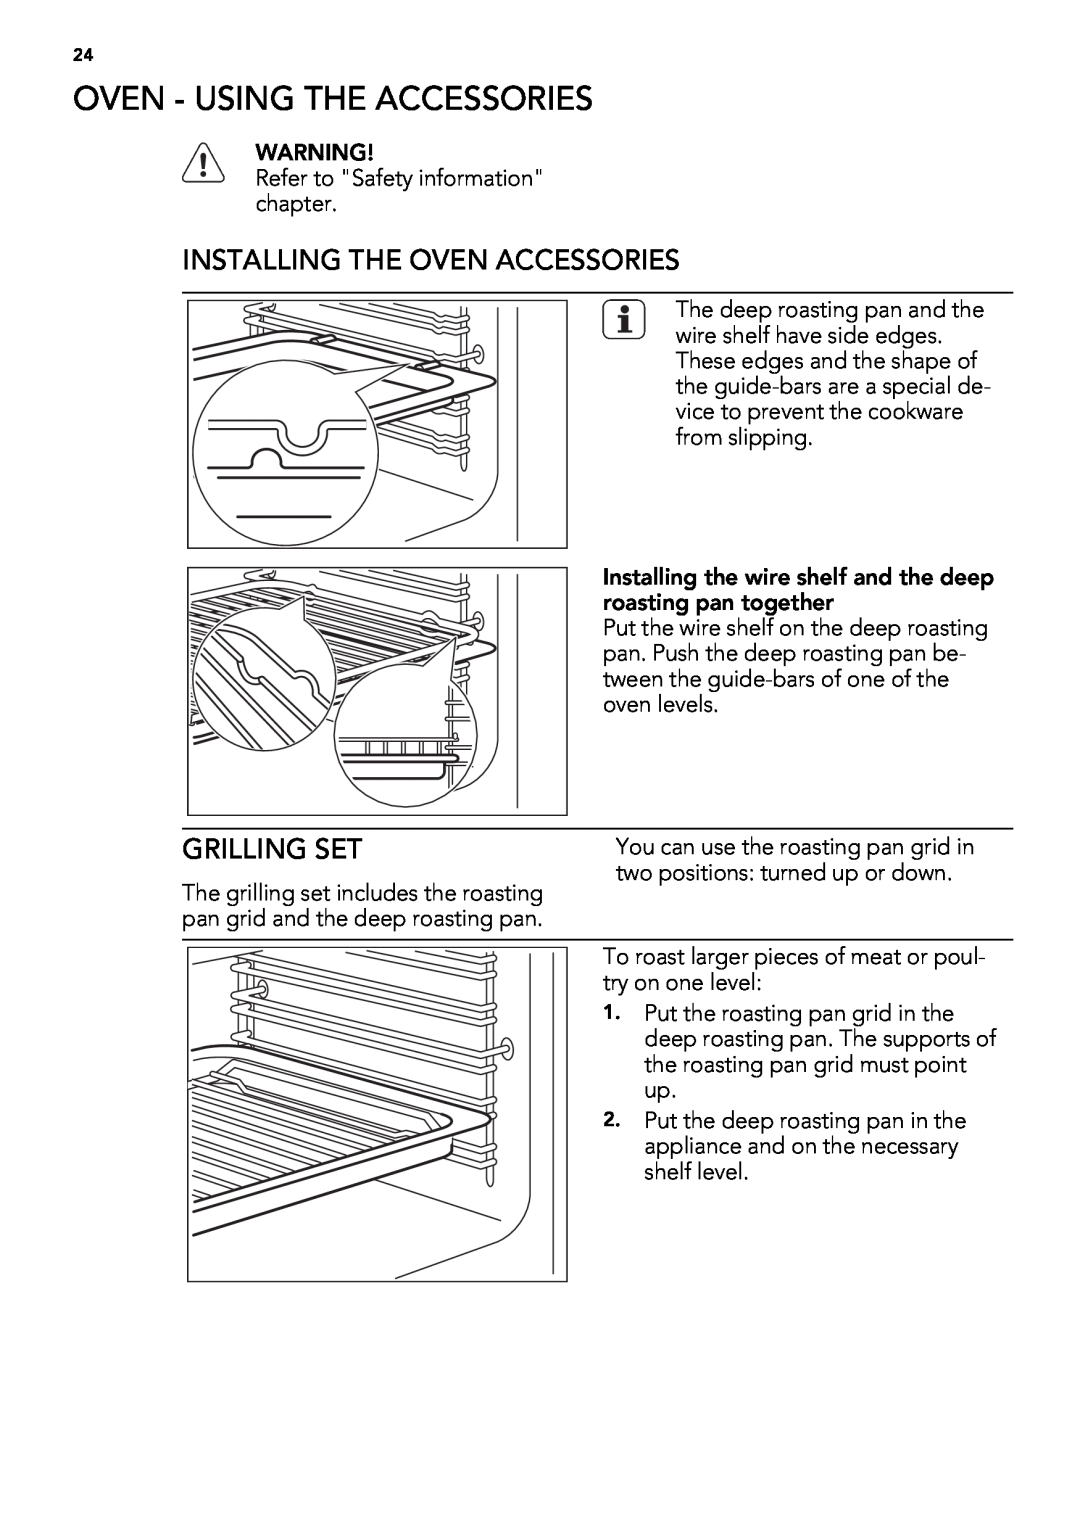 AEG 49332I-MN user manual Oven - Using The Accessories, Installing The Oven Accessories, Grilling Set 